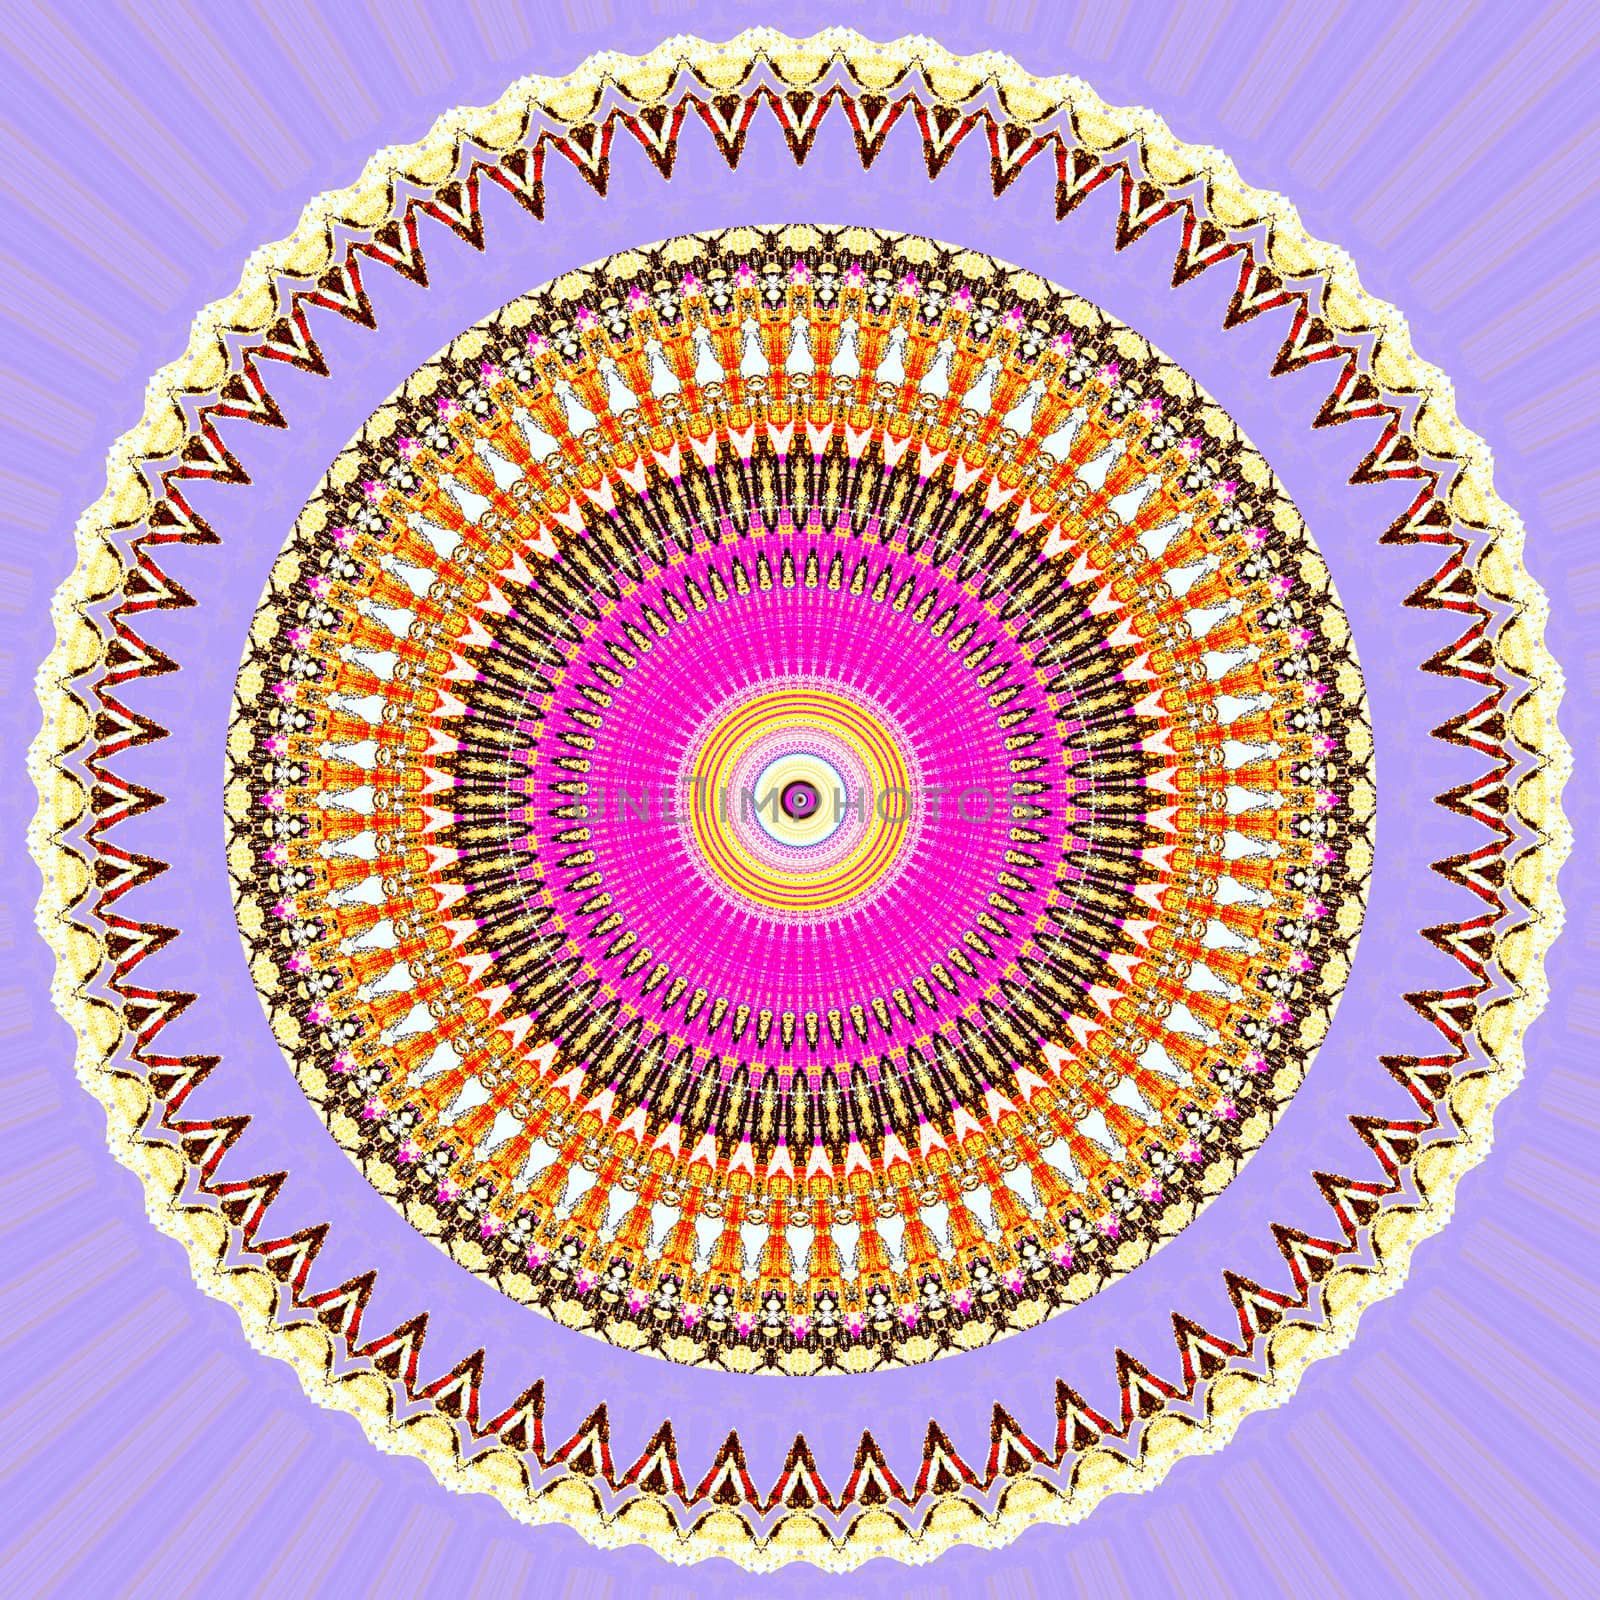 Bitmap Illustration of Complex Mandala